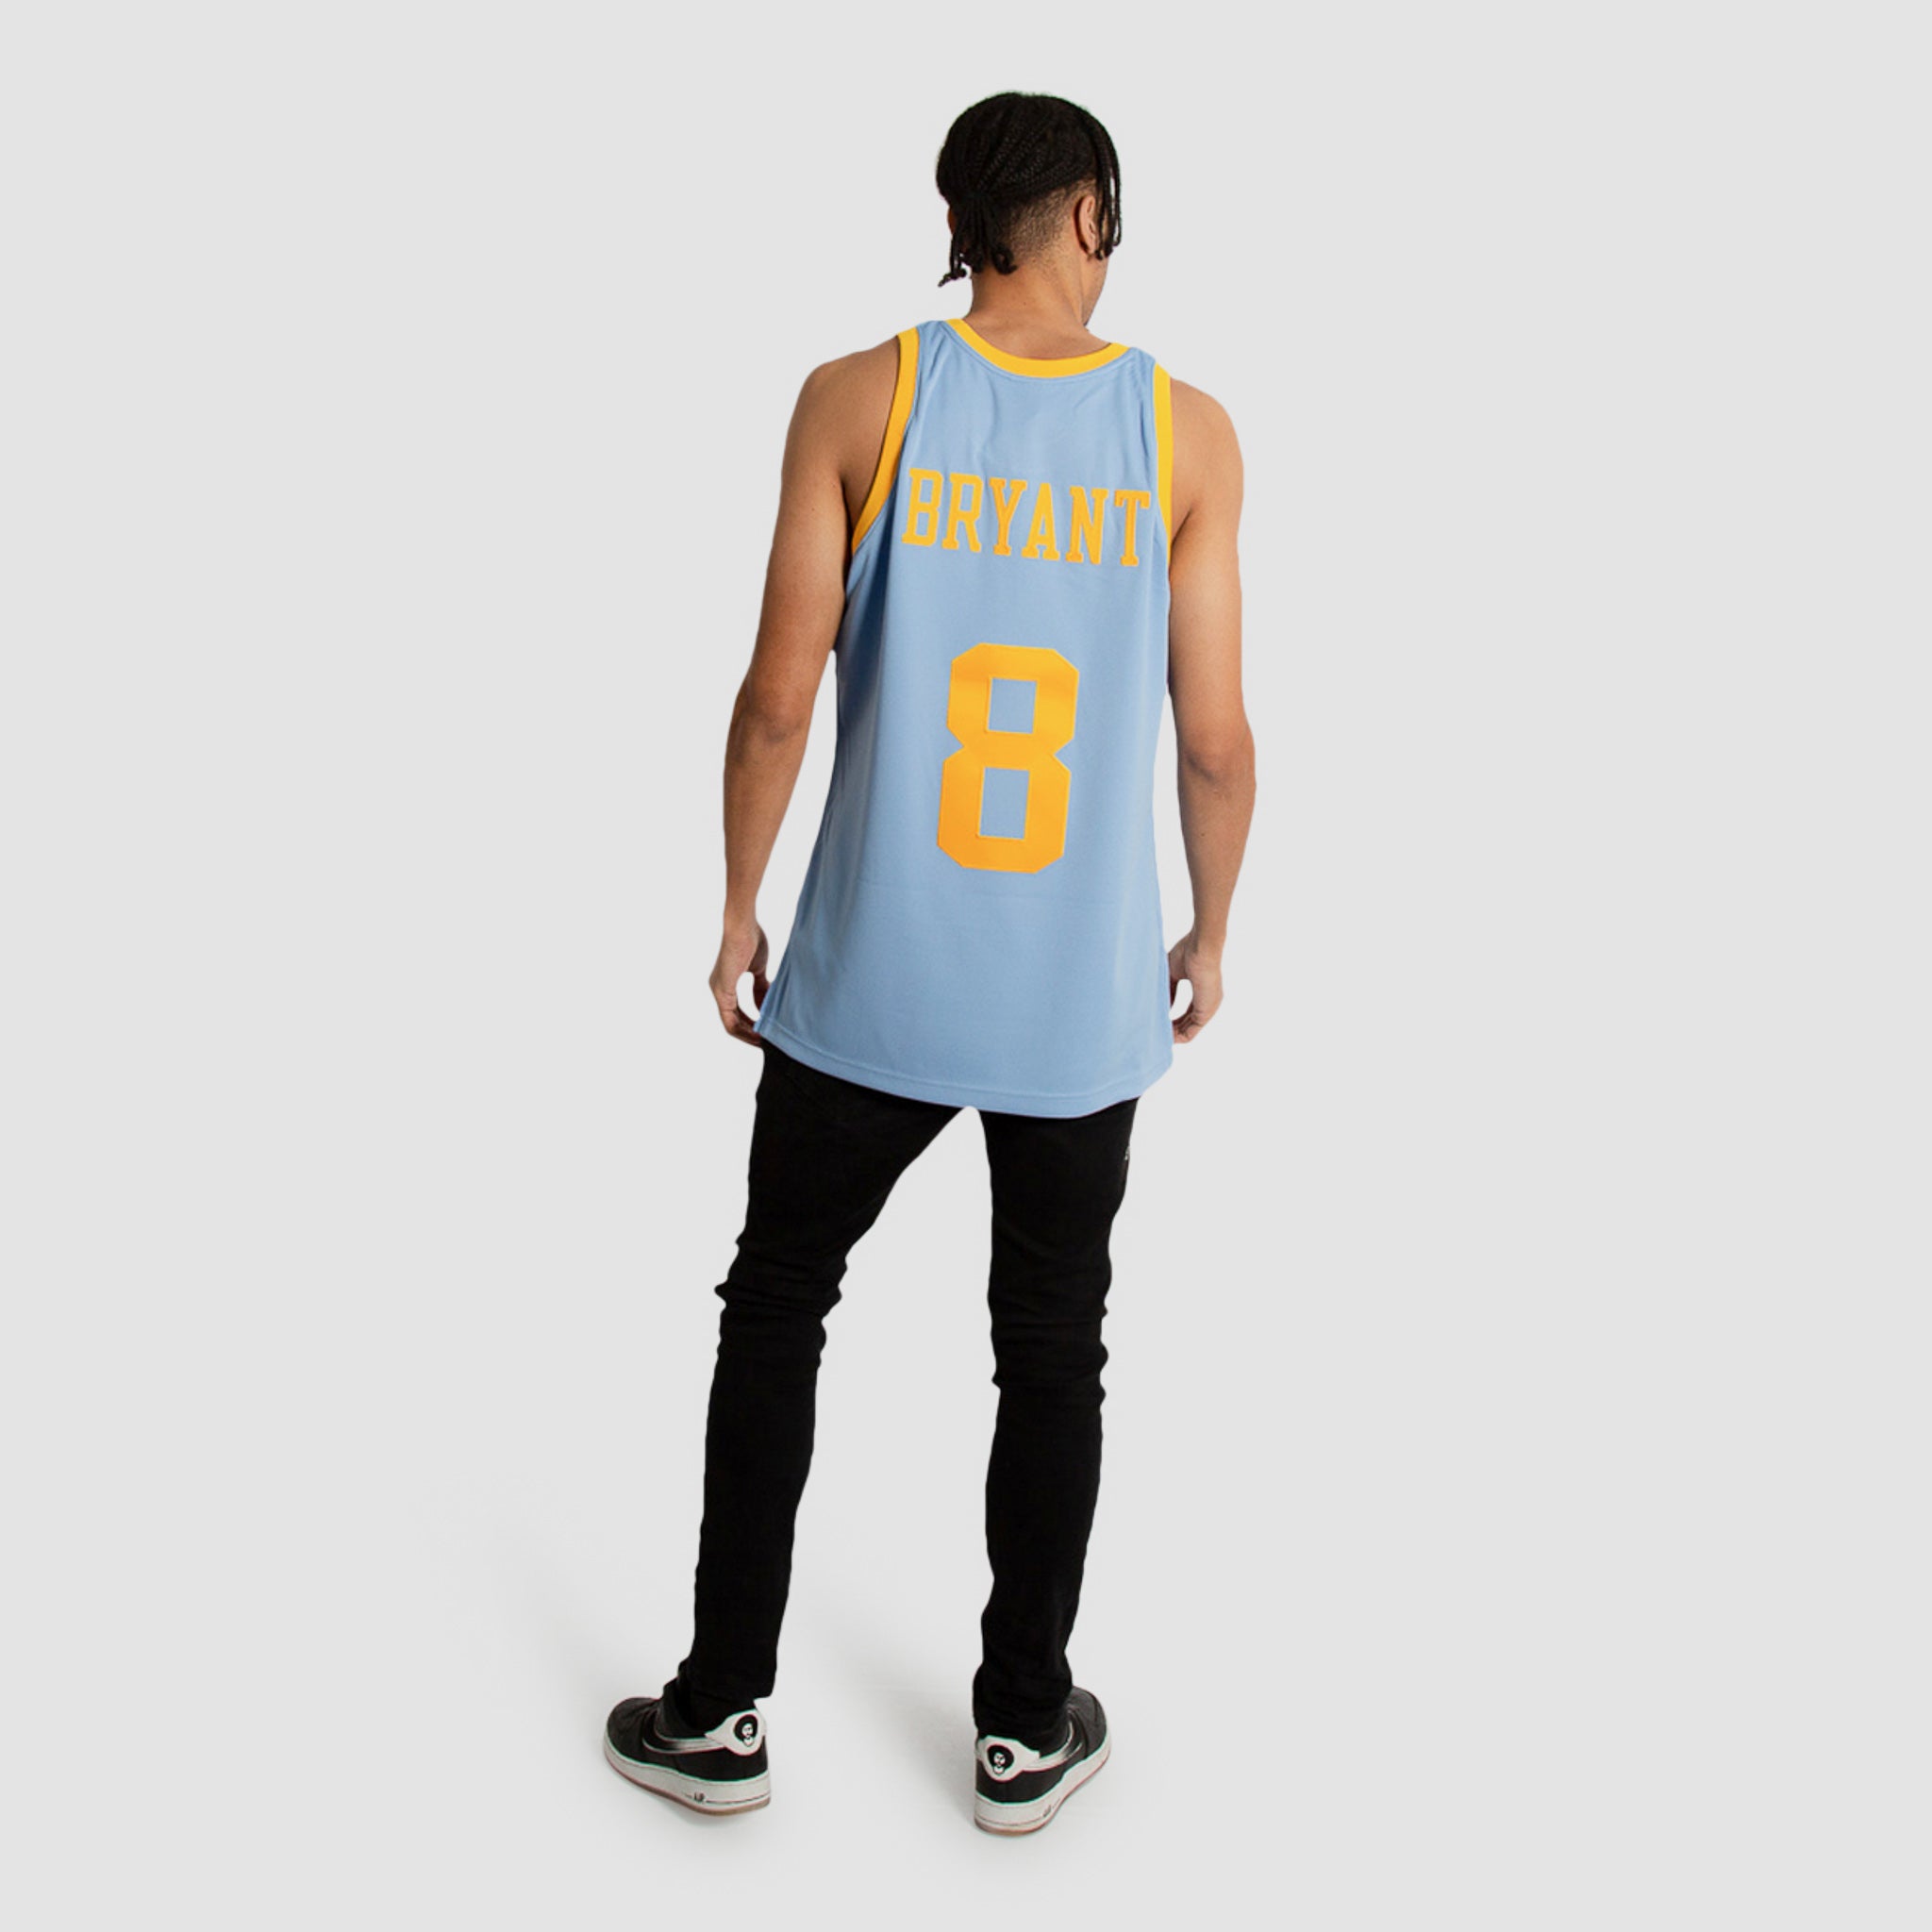 Kobe Bryant Lakers Throwback Basketball Jersey – Best Sports Jerseys